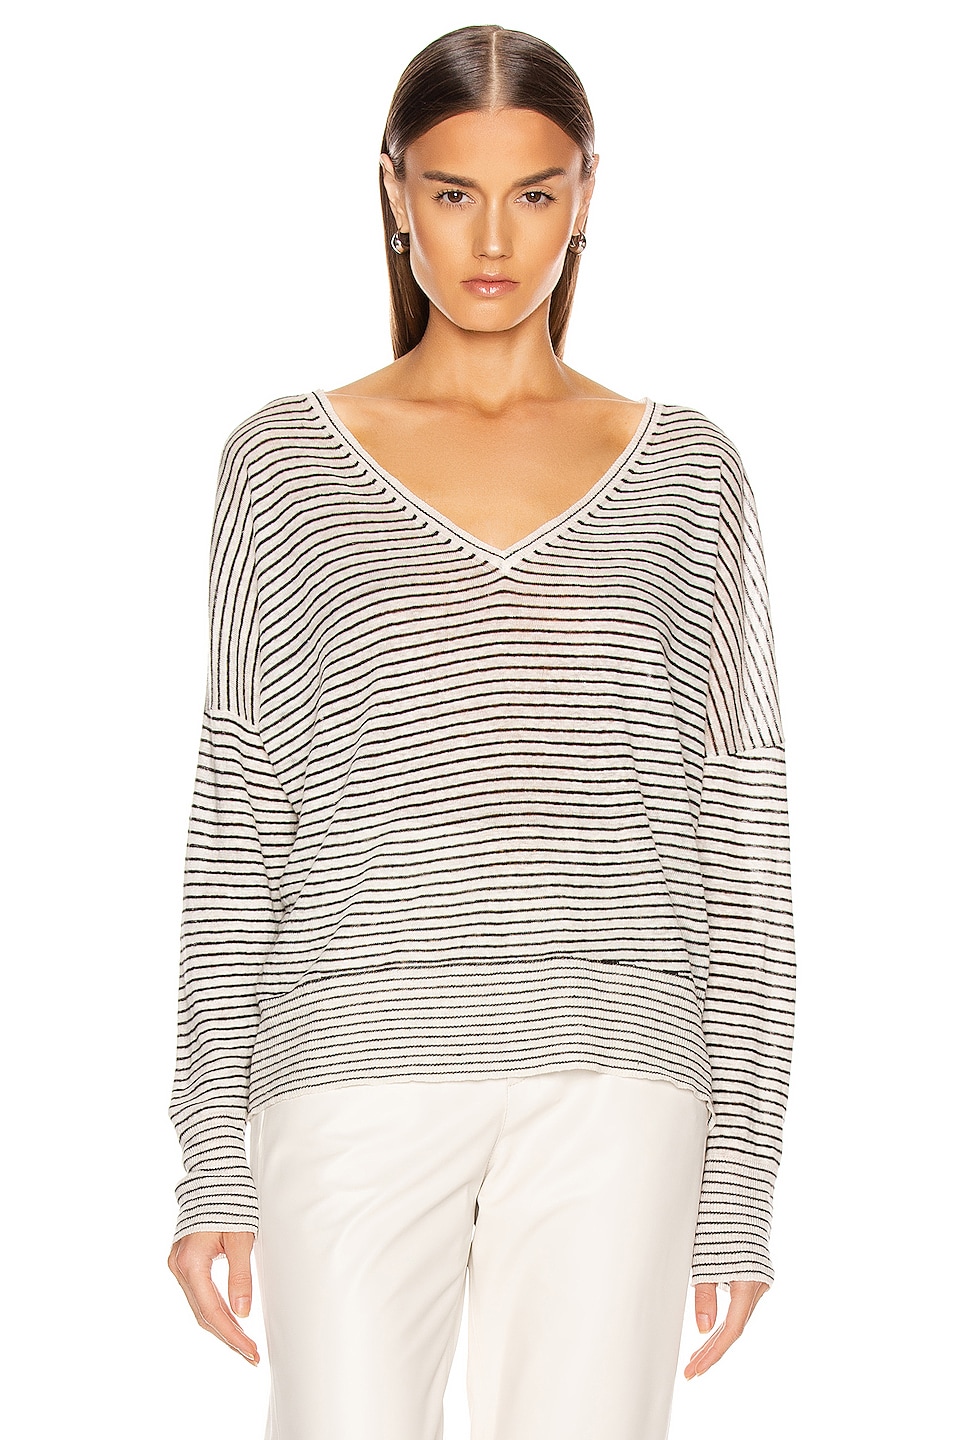 NILI LOTAN Maggie Linen Sweater in Ivory & Black Stripe | FWRD